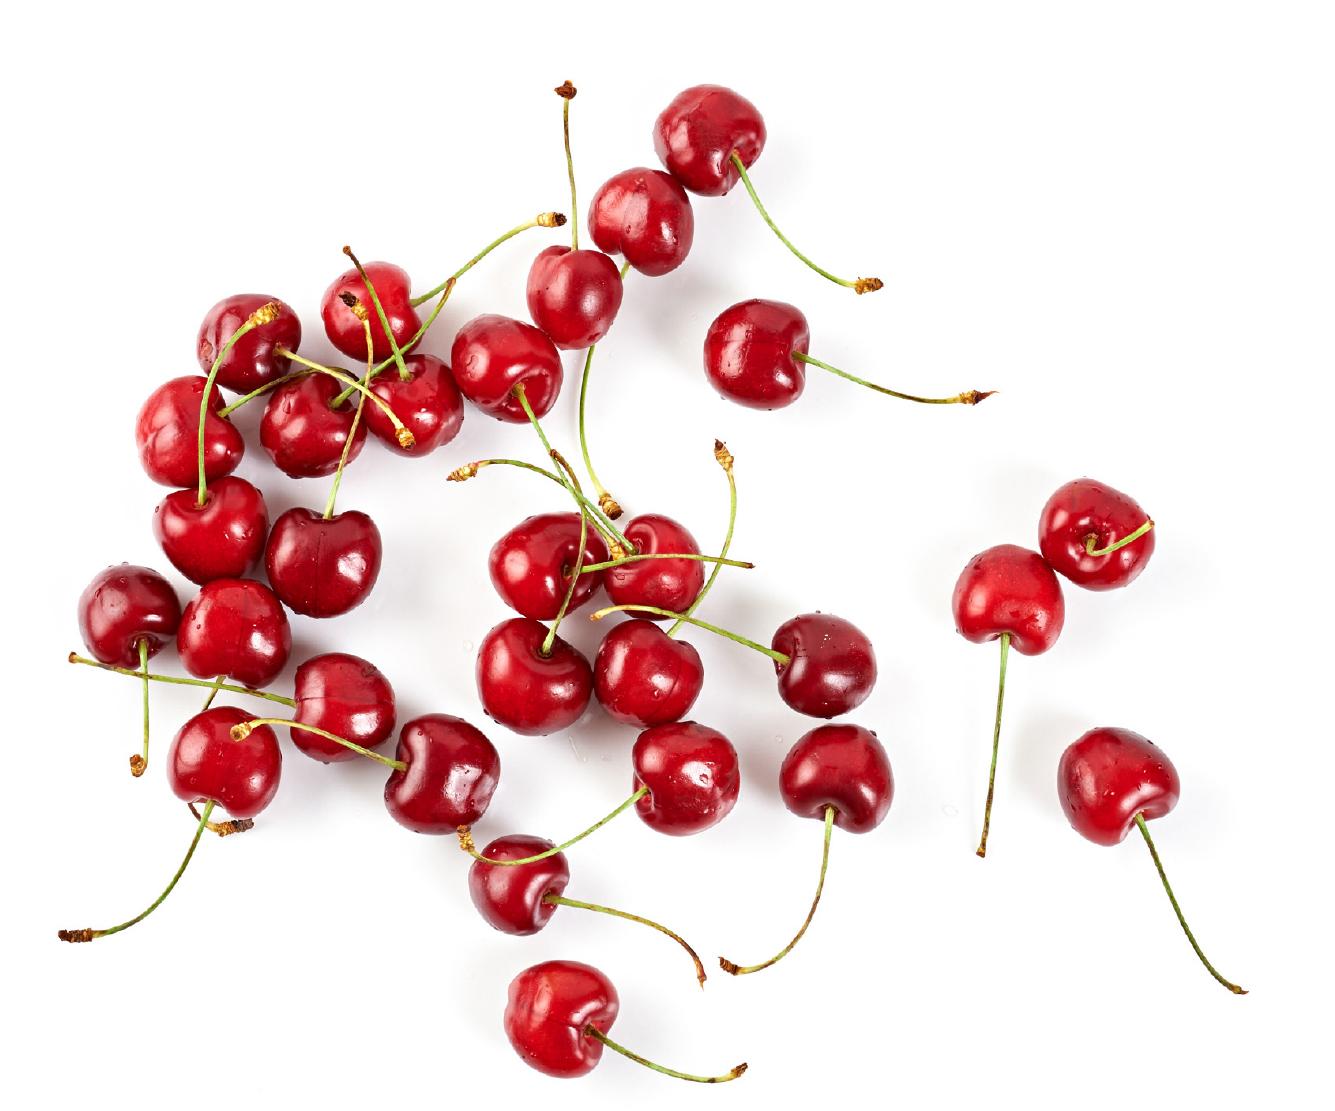 Tart cherries on a white background.